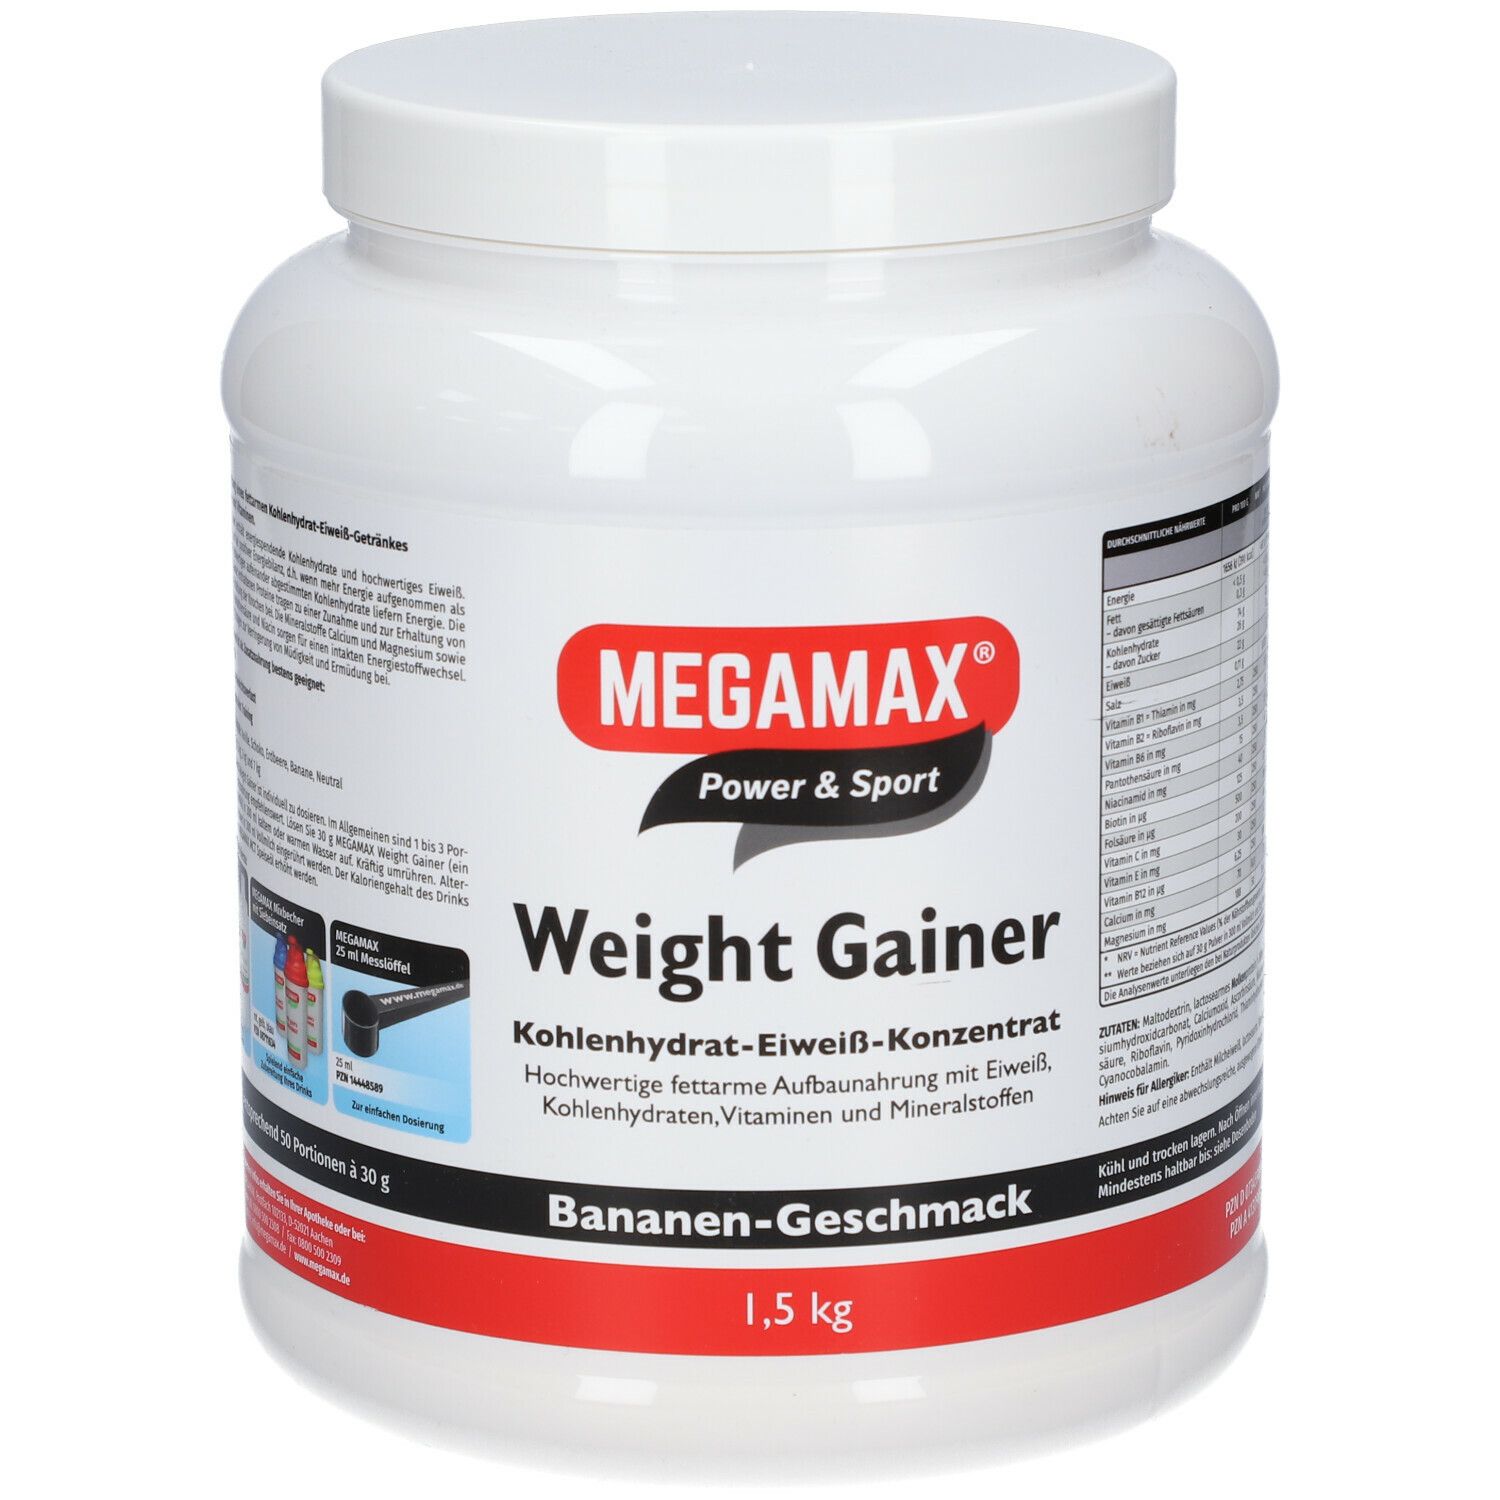 MEGAMAX® Power & Sport Weight Gainer Kohlenhydrat-Eiweiß-Konzentrat Bananen-Geschmack